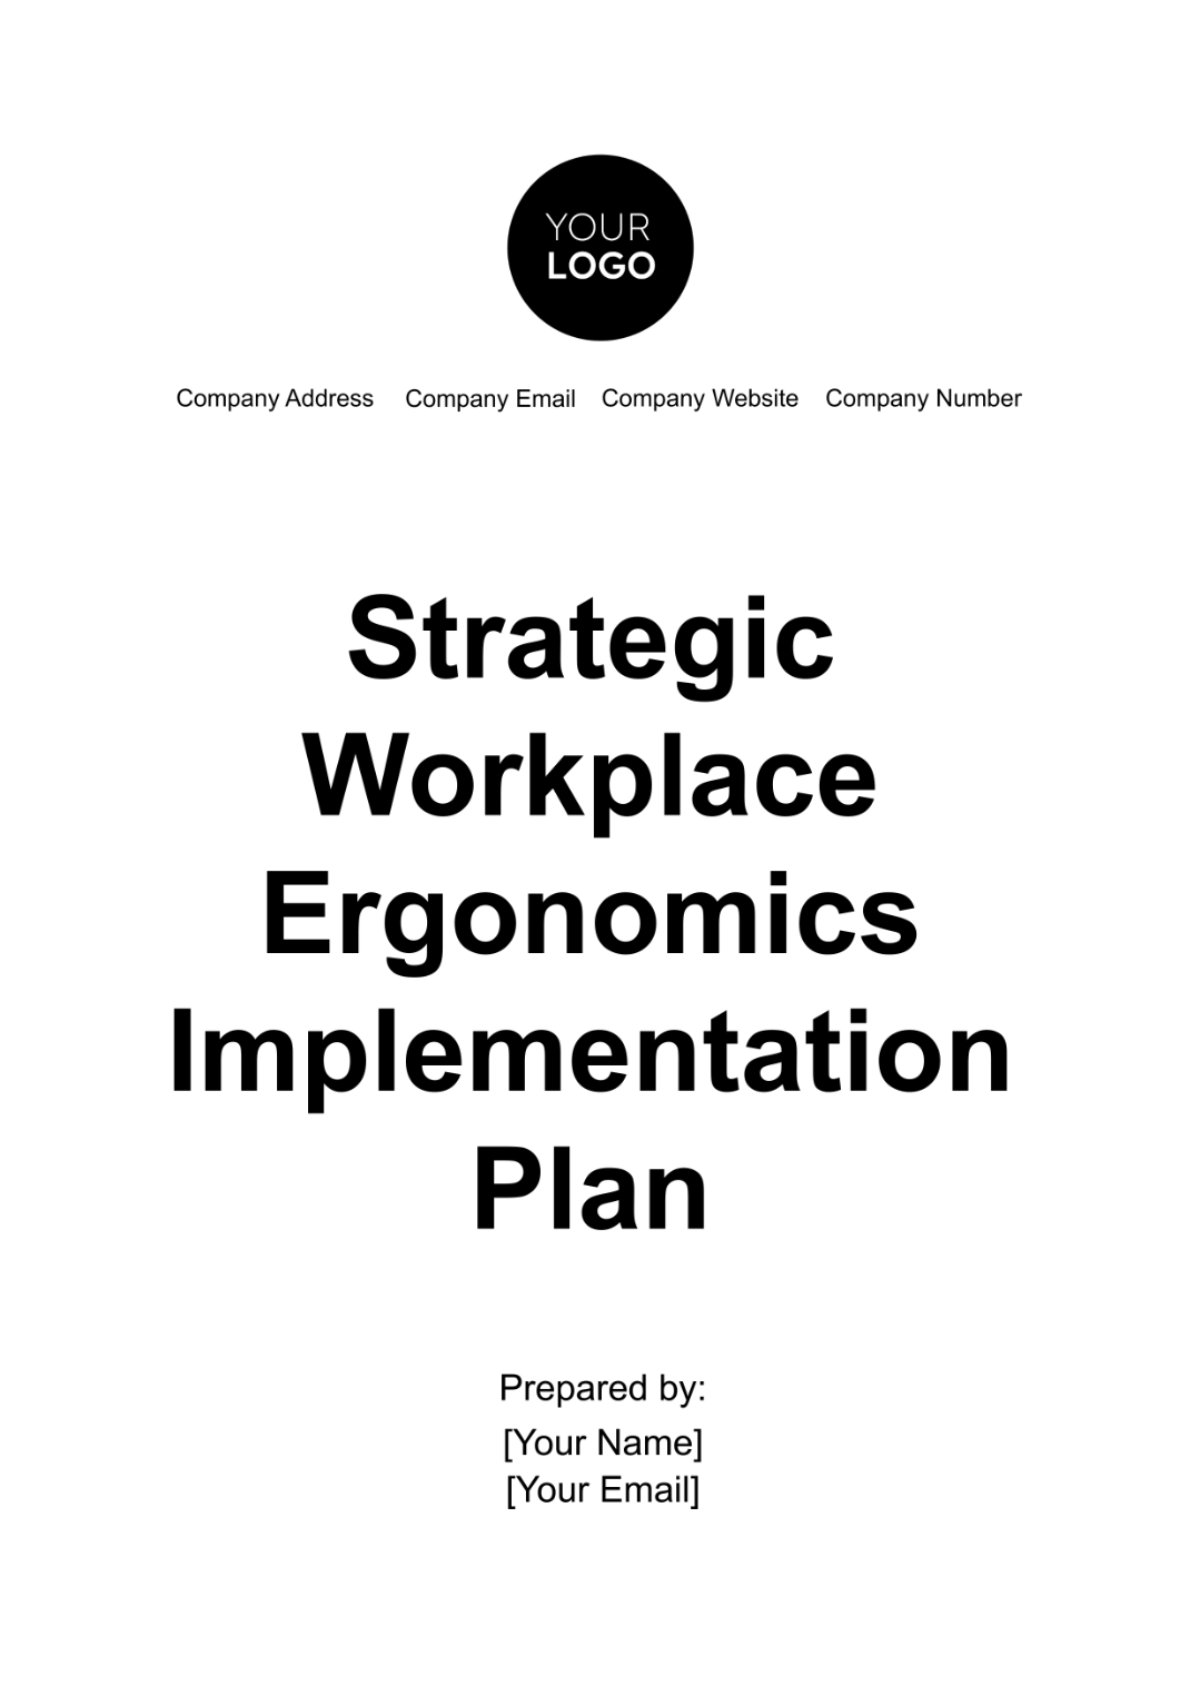 Free Strategic Workplace Ergonomics Implementation Plan Template